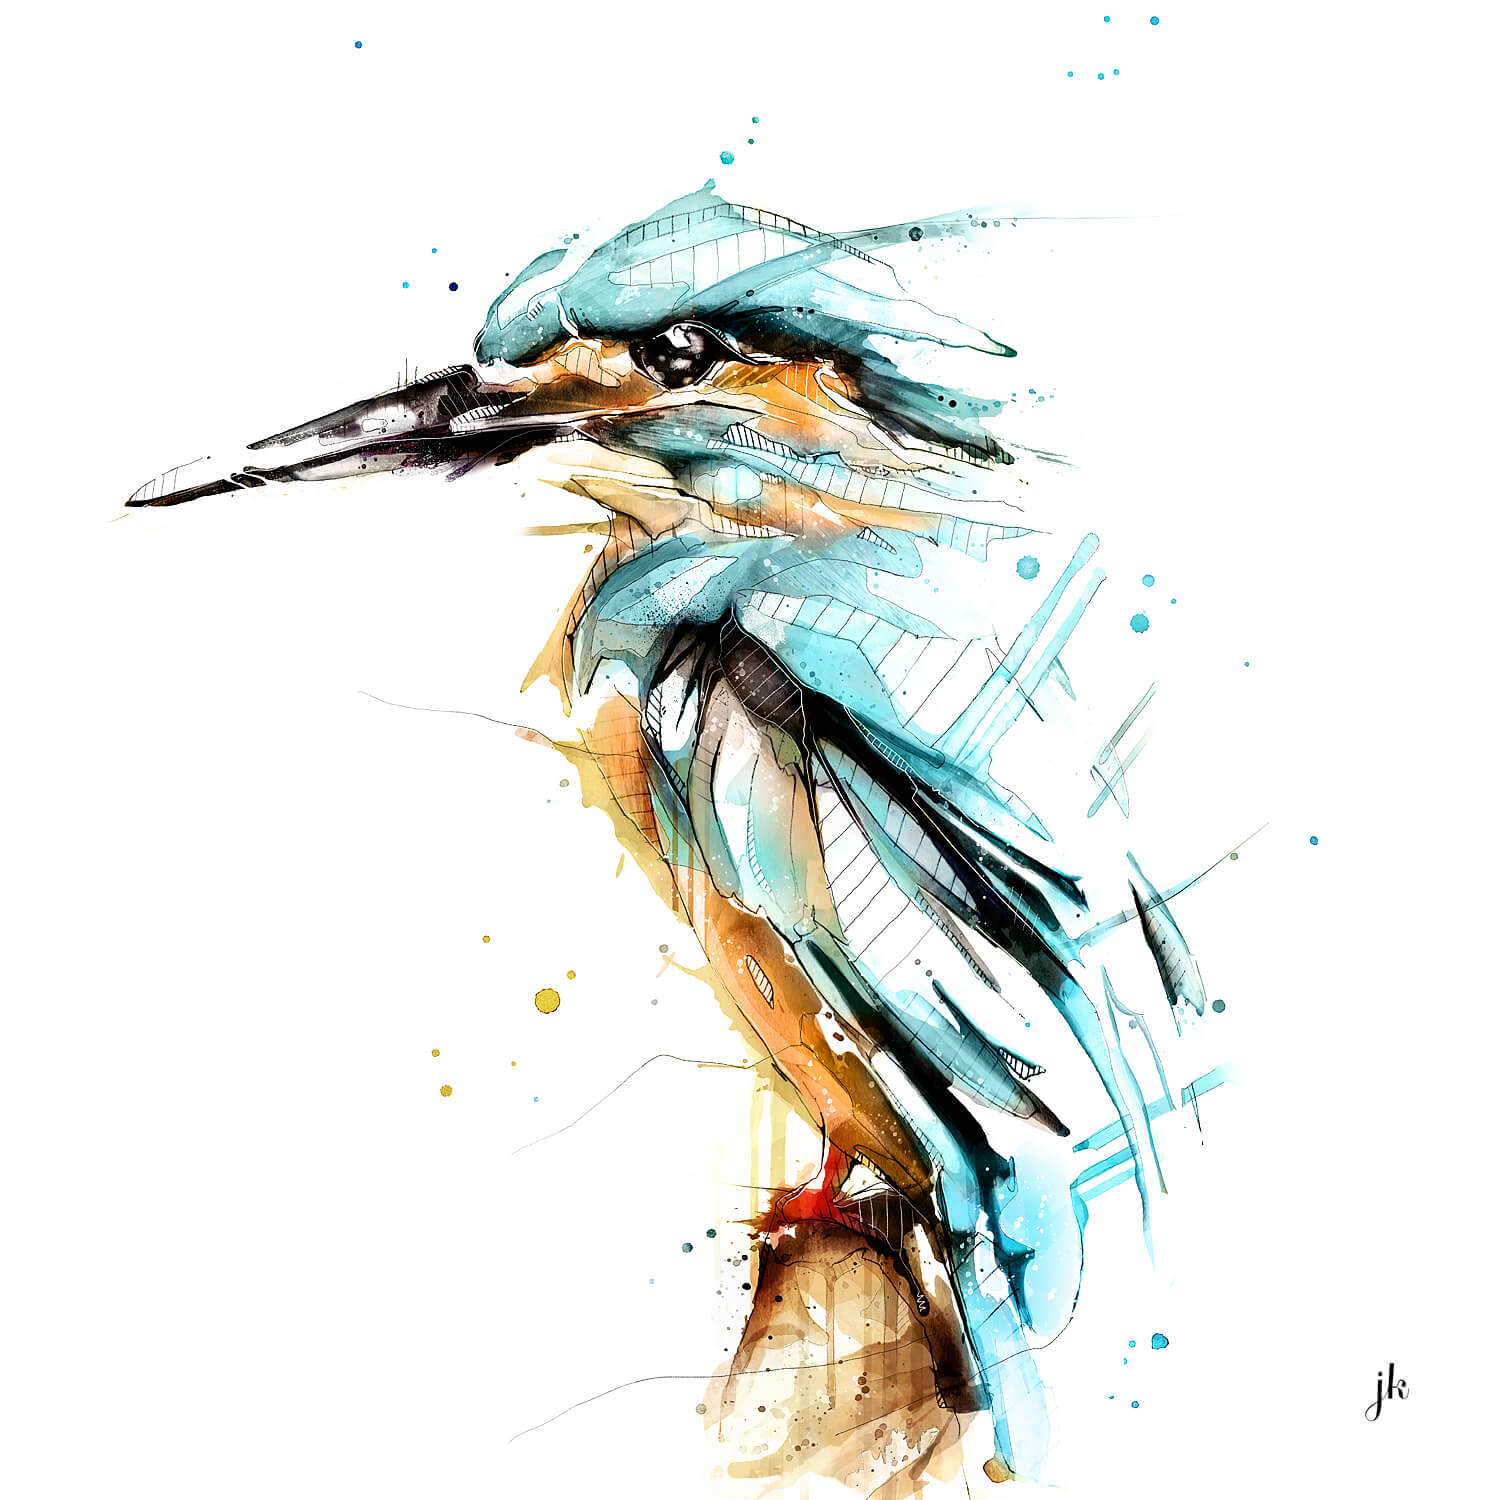 River Kingfisher Canvas Print